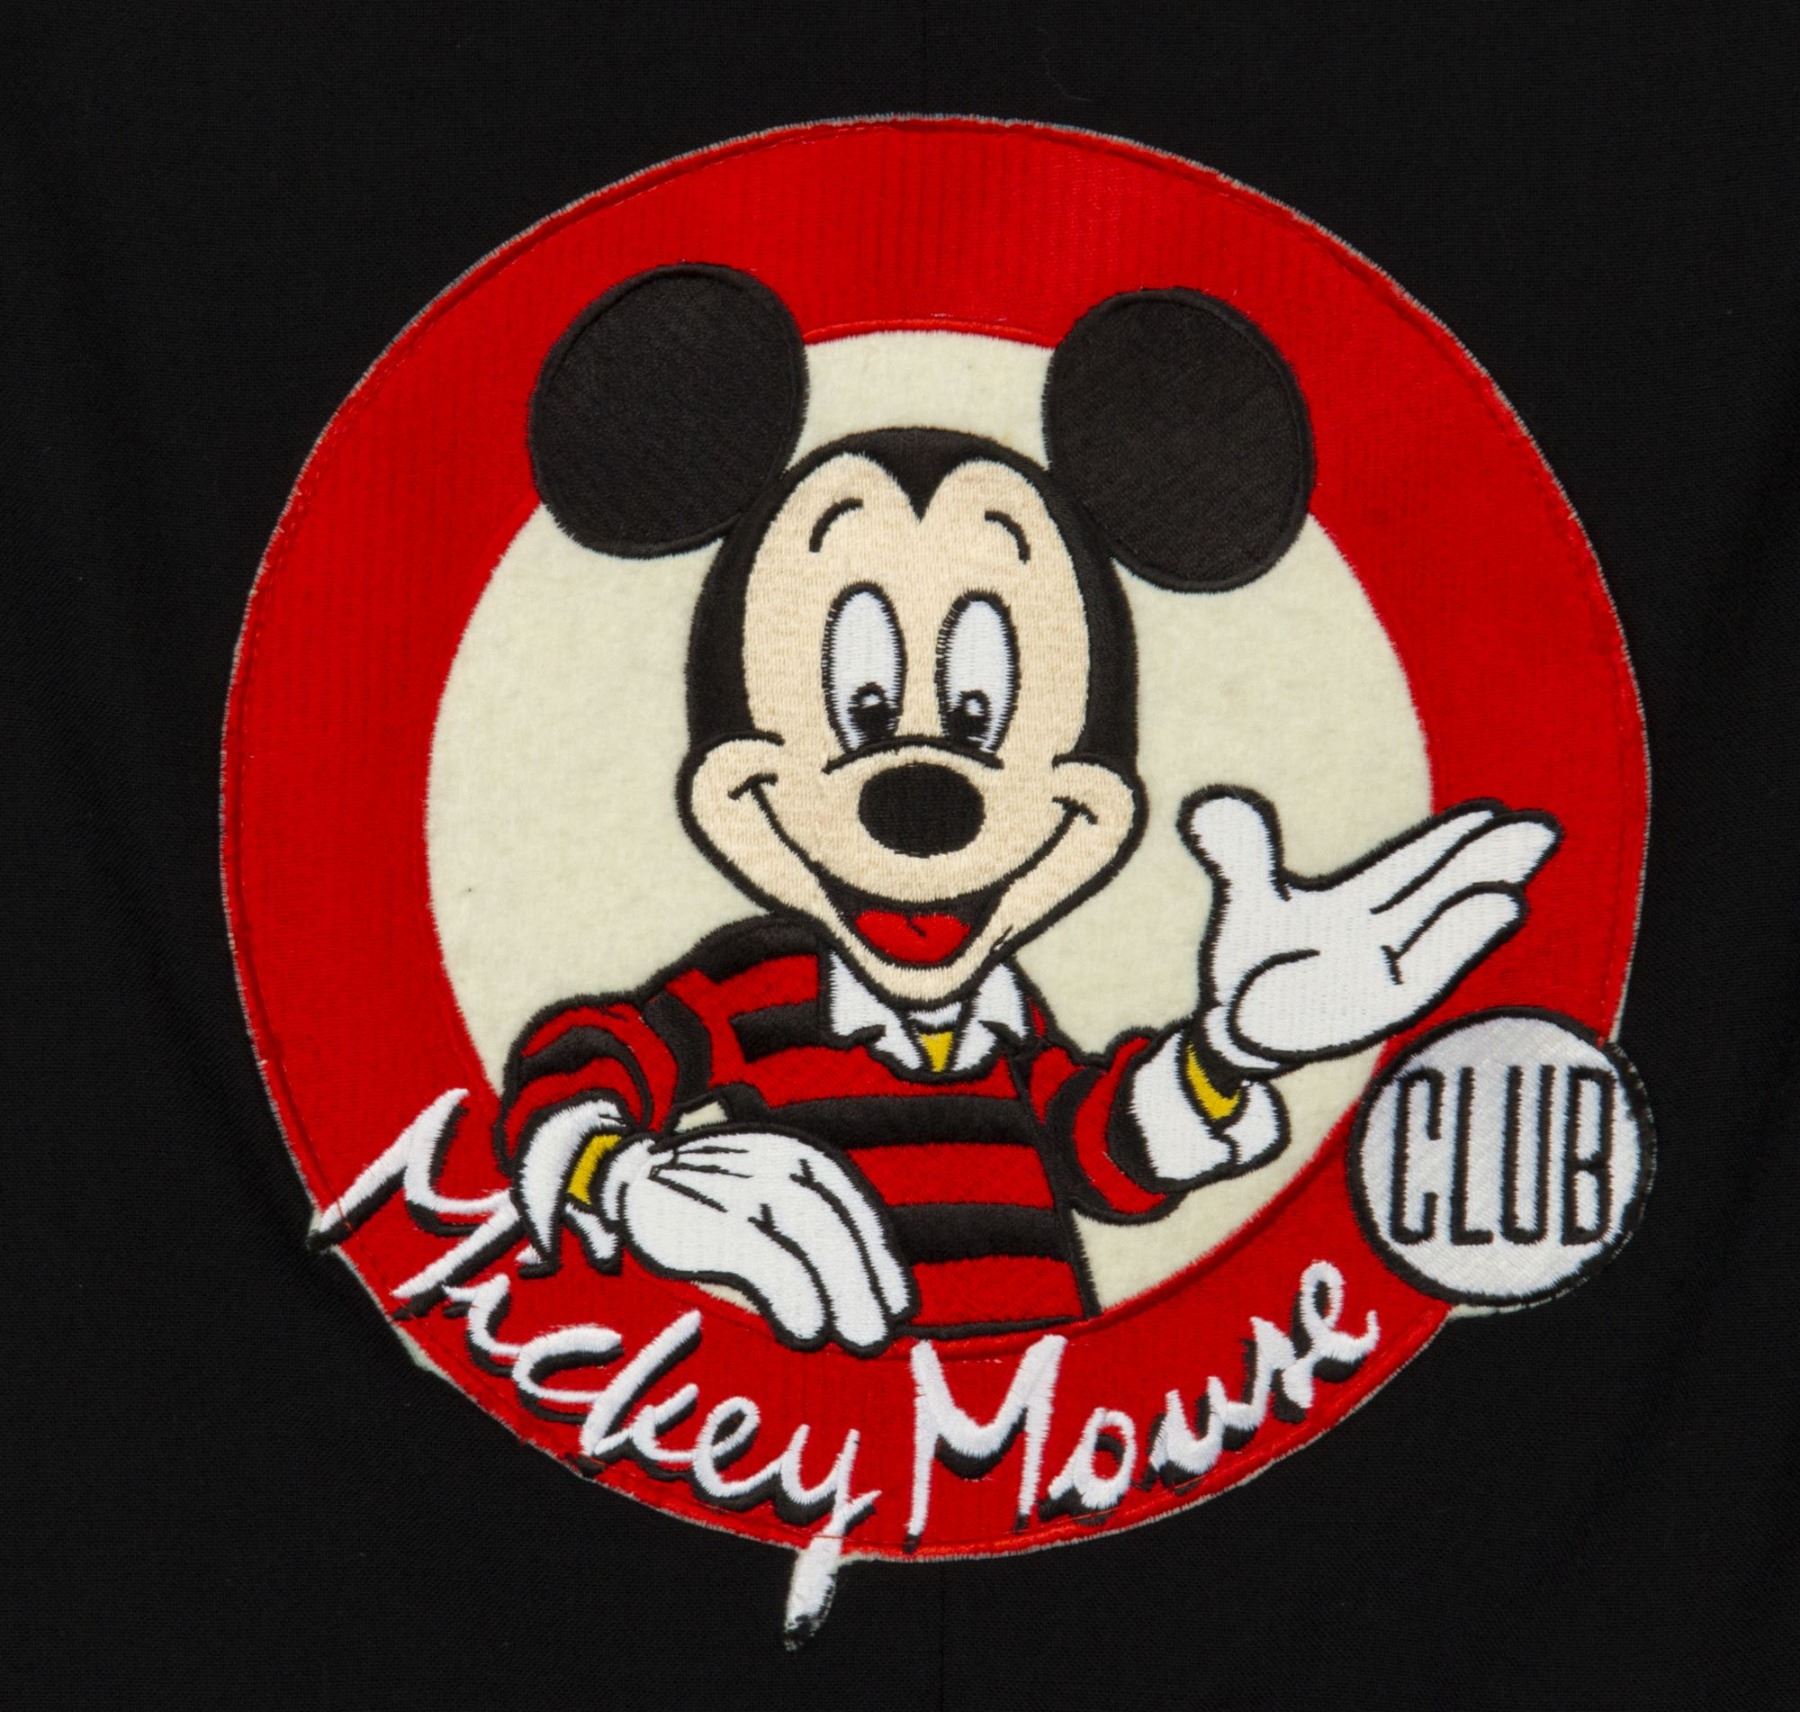 Mickey Mouse Club Logo